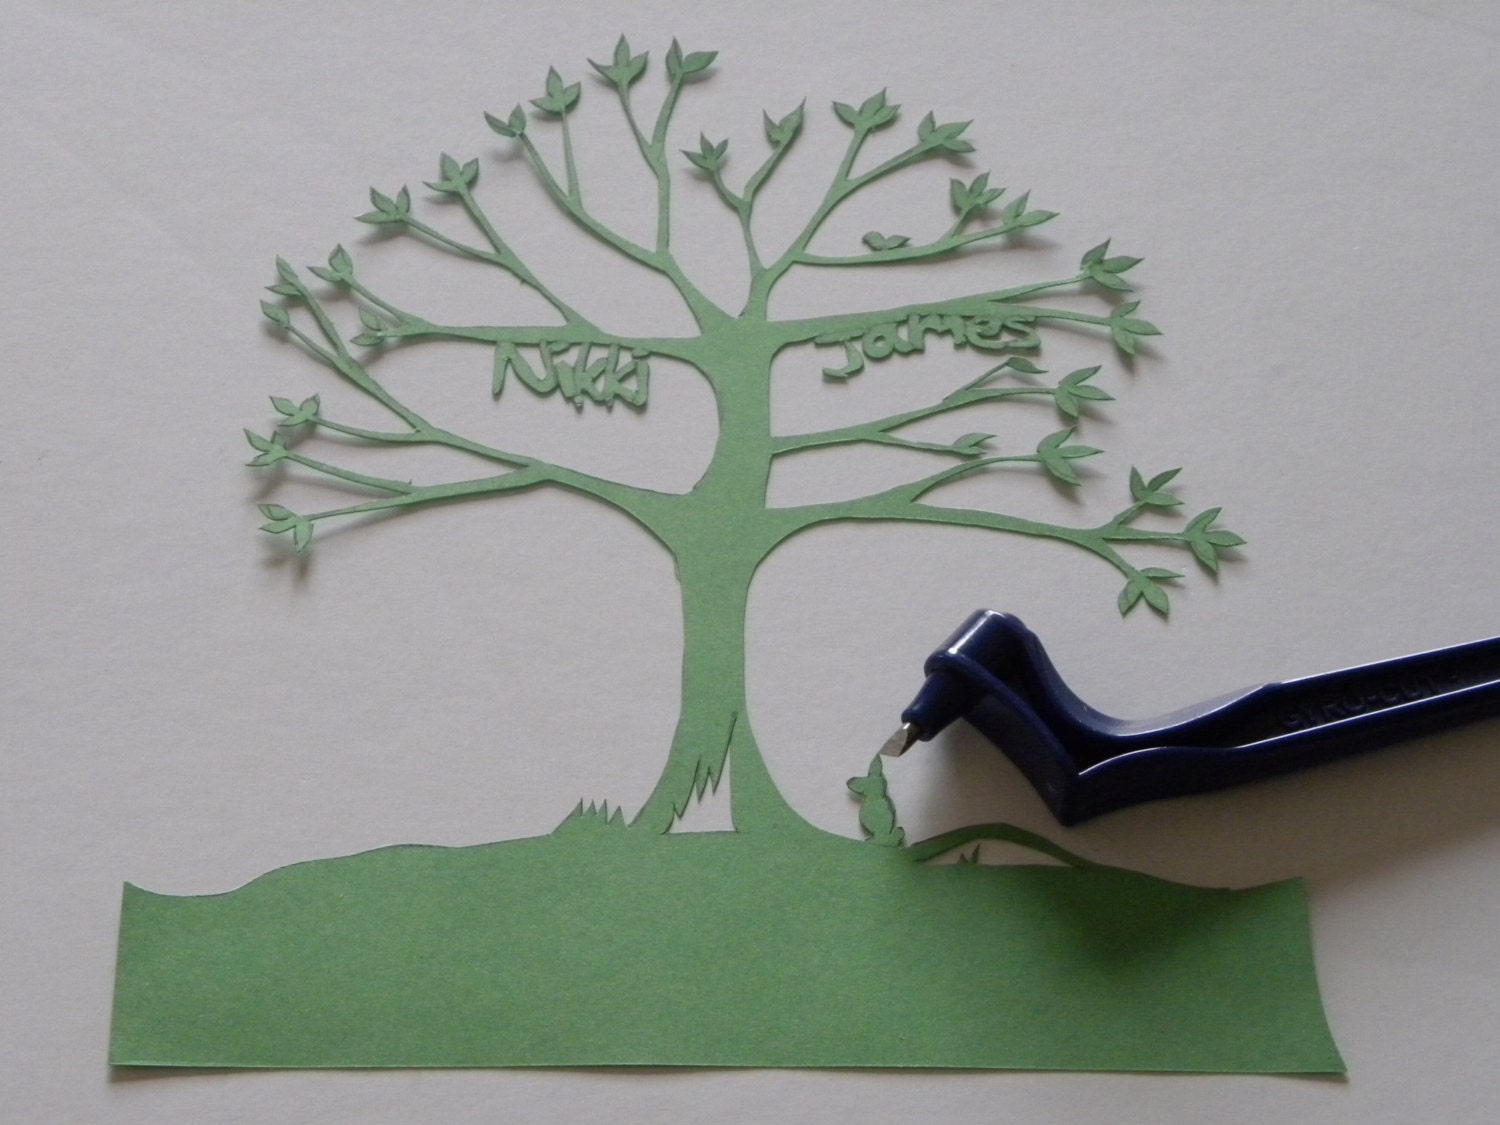 GYROCUT paper cutting craft tool. Perfect craft & hobby tool